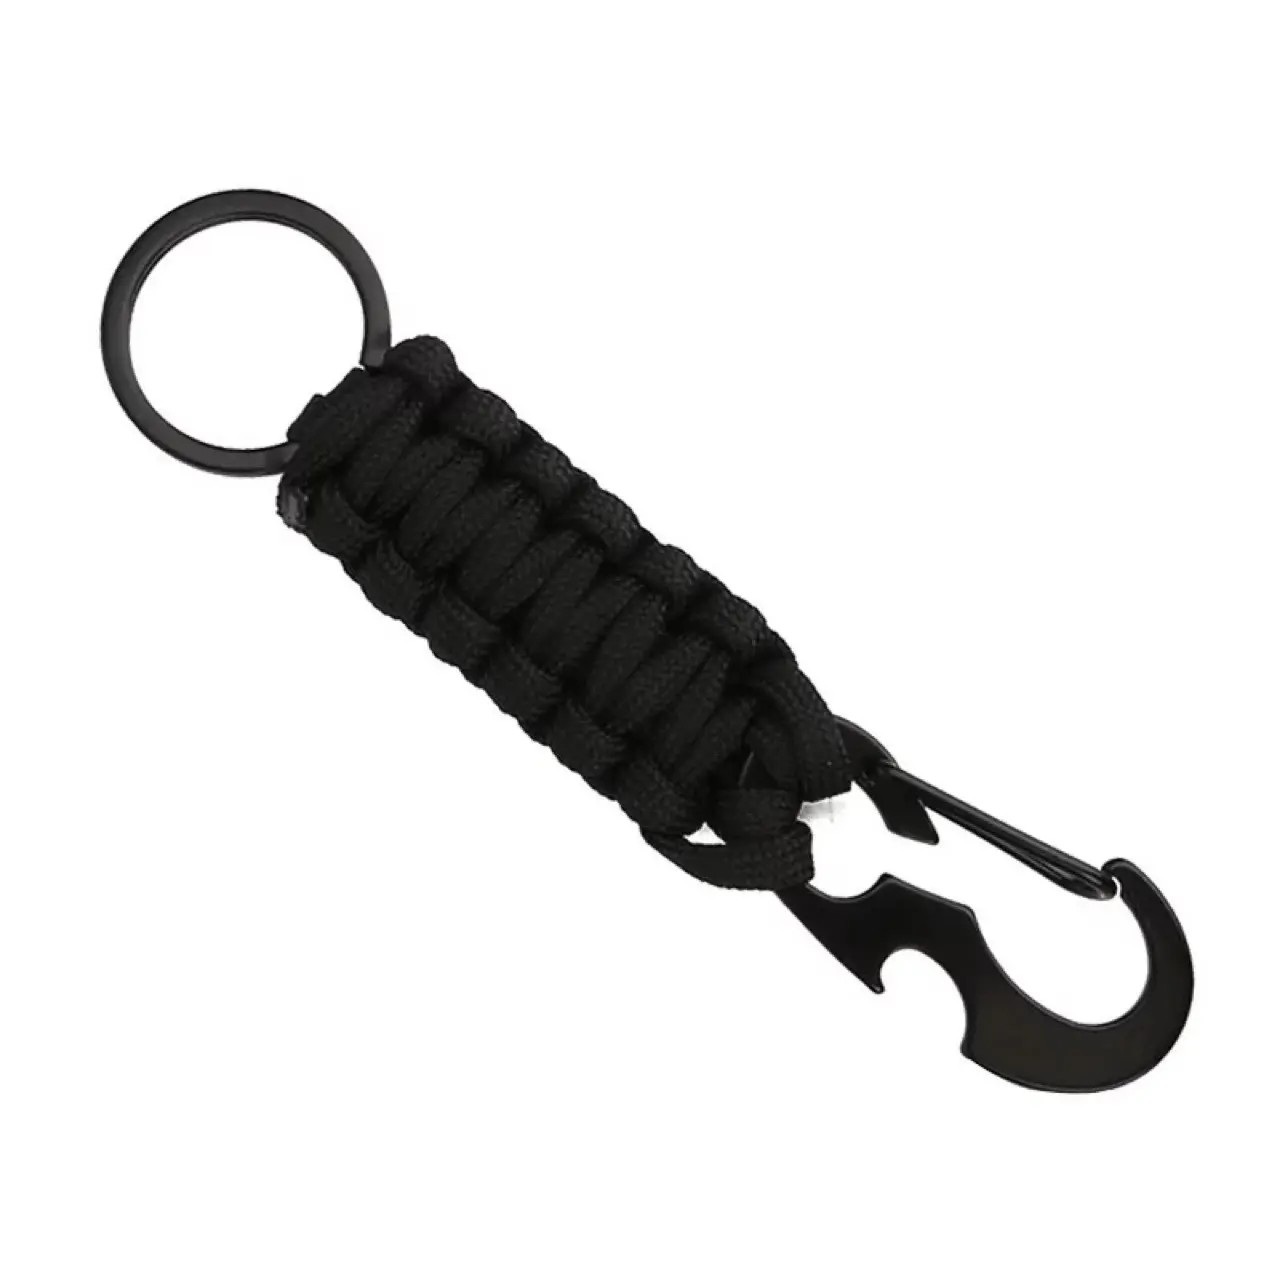 Hot selling outdoor survival seven core umbrella rope key chain hand woven key chain mountain key pendant